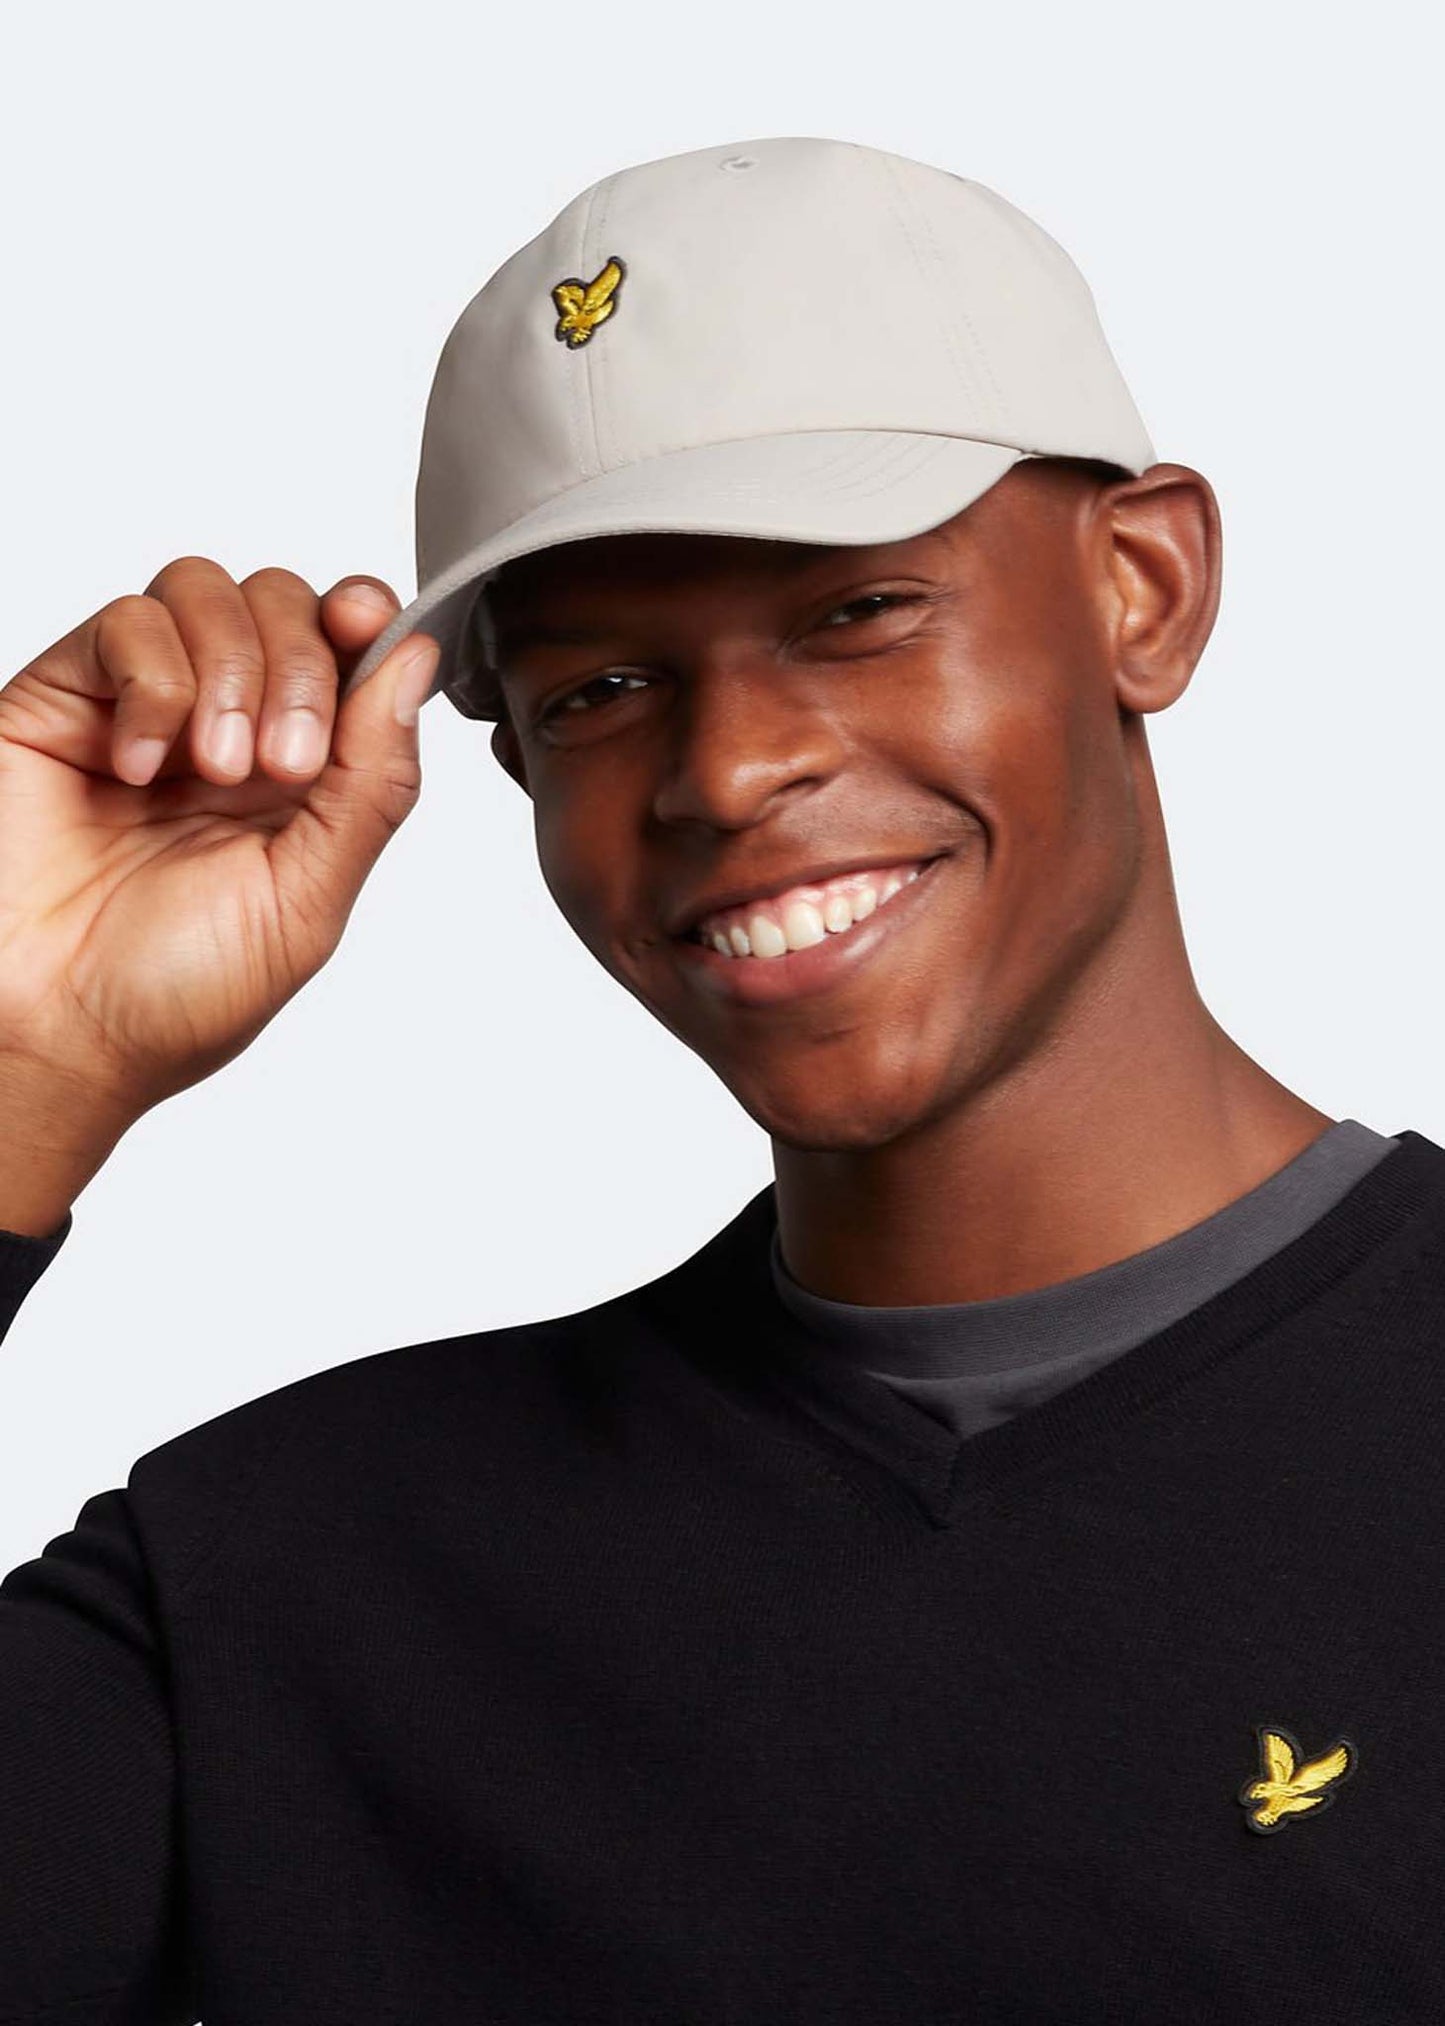 Ripstop baseball cap - cold grey